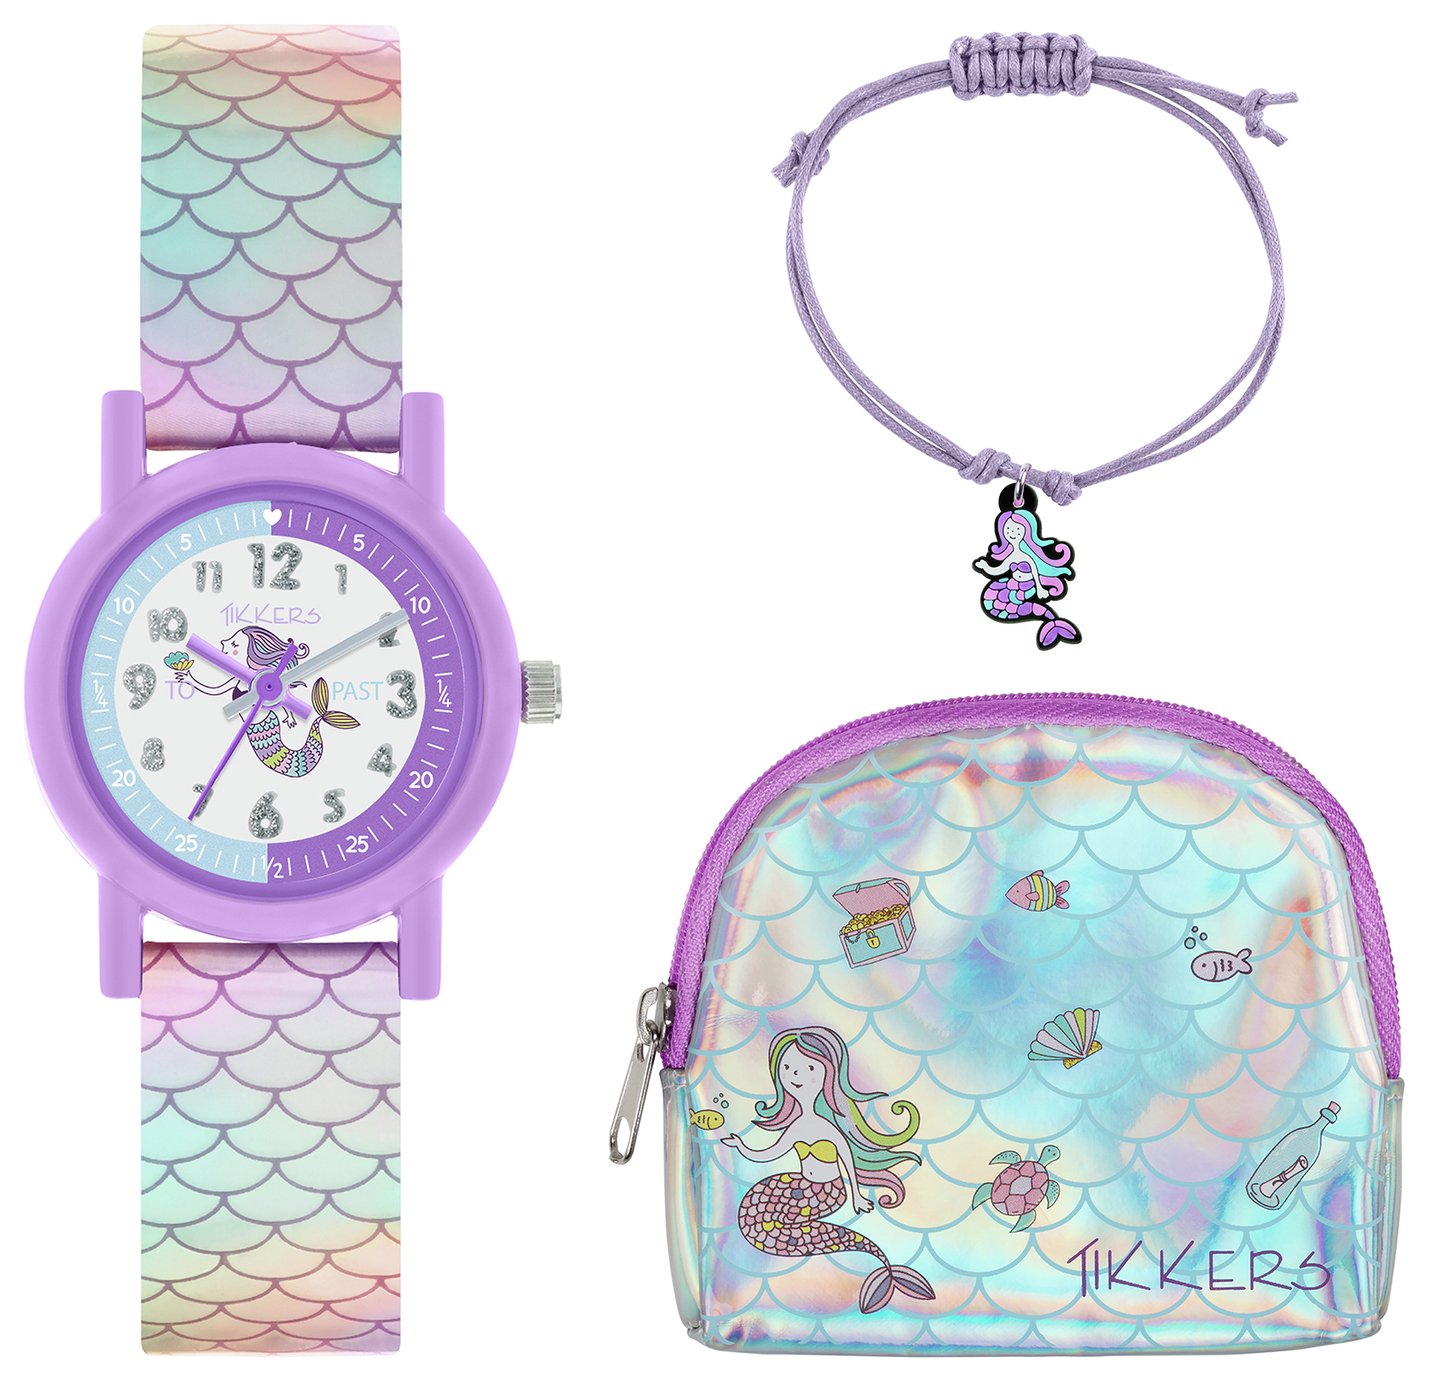 Tikkers Mermaid Watch Charm Bracelet and Purse Set